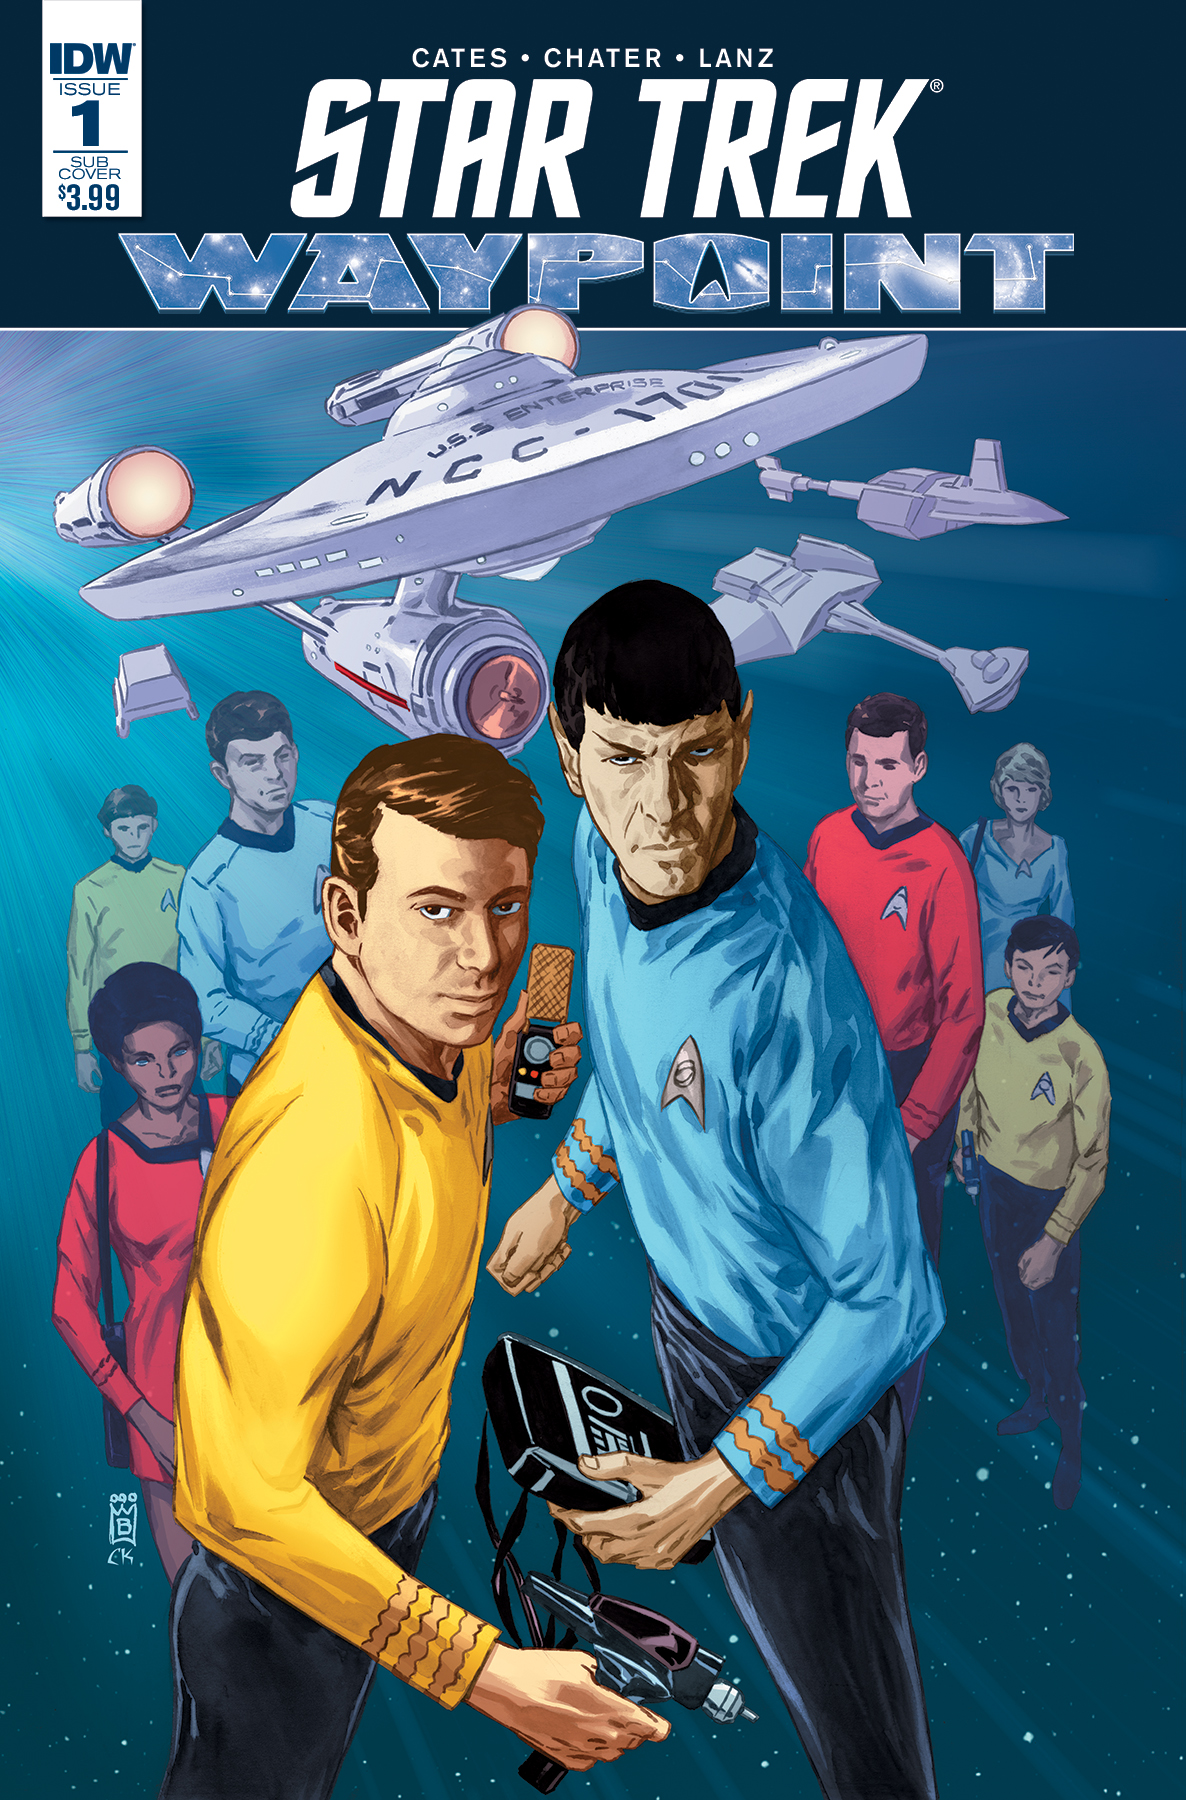 The Original Star Trek Universe Returns In IDW's New Comic Anthology